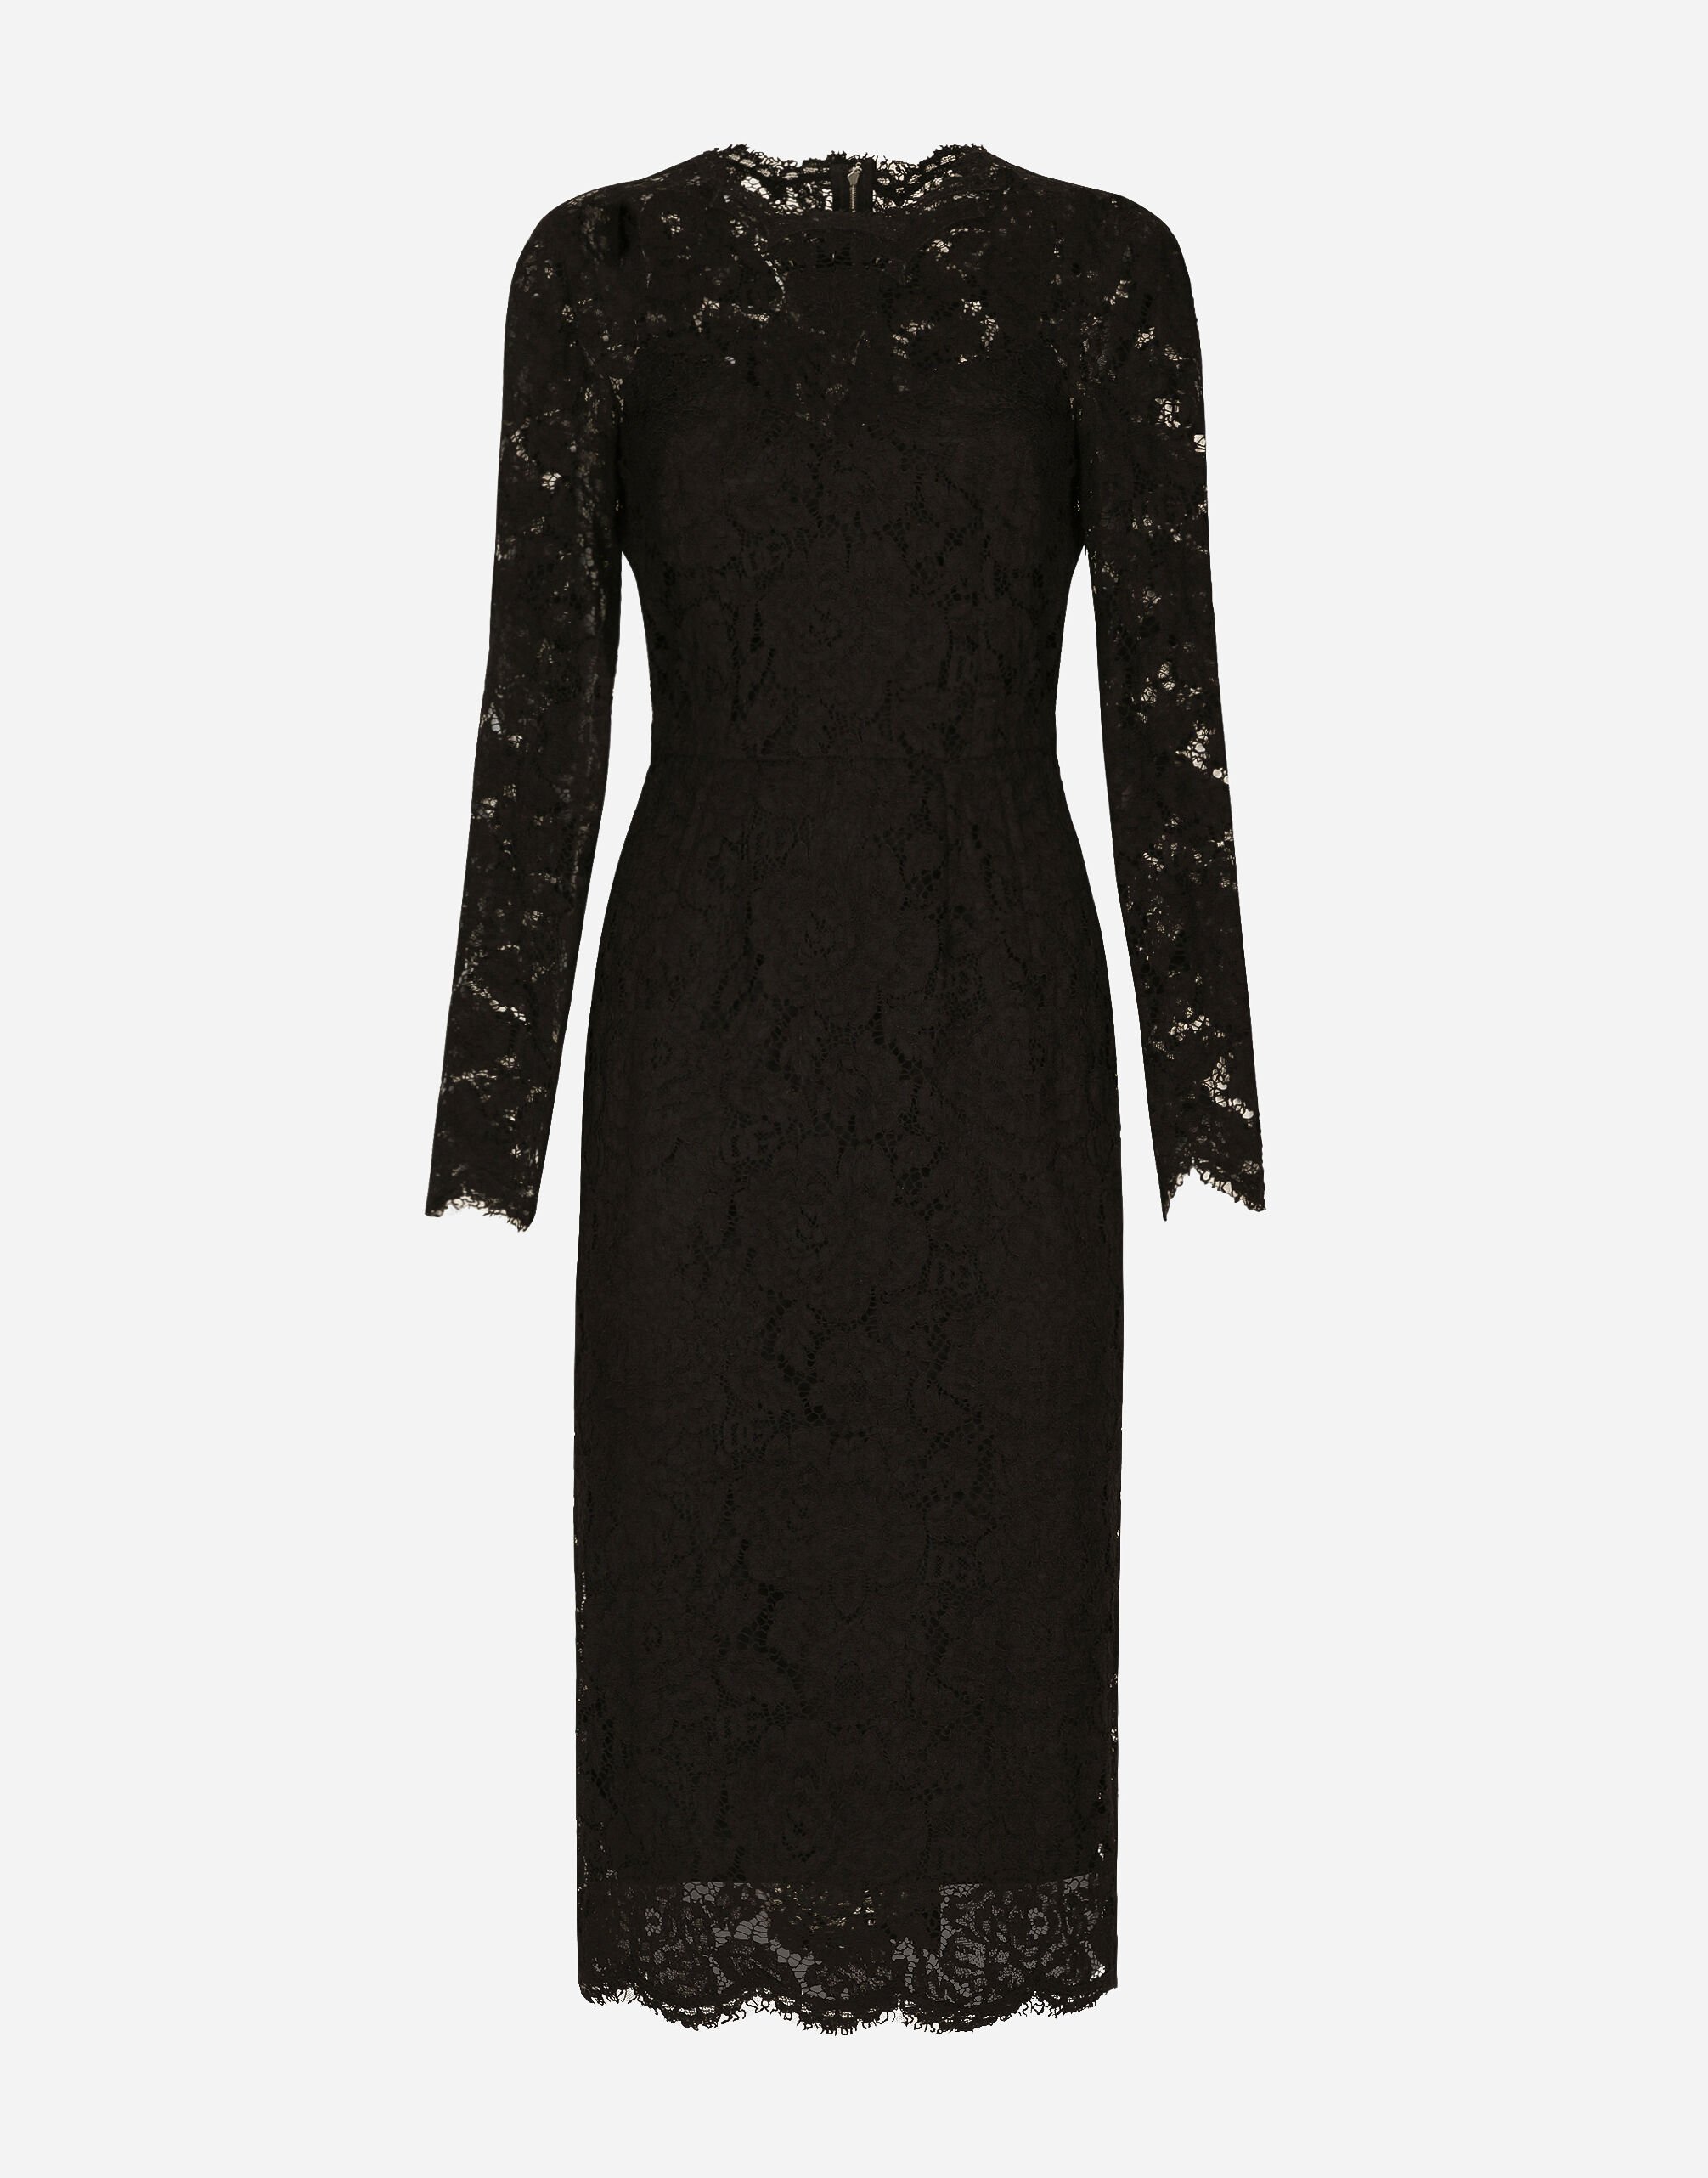 Dolce & Gabbana فستان بأكمام طويلة وطول للربلة من دانتيل مرن موسوم أسود BB6002AI413